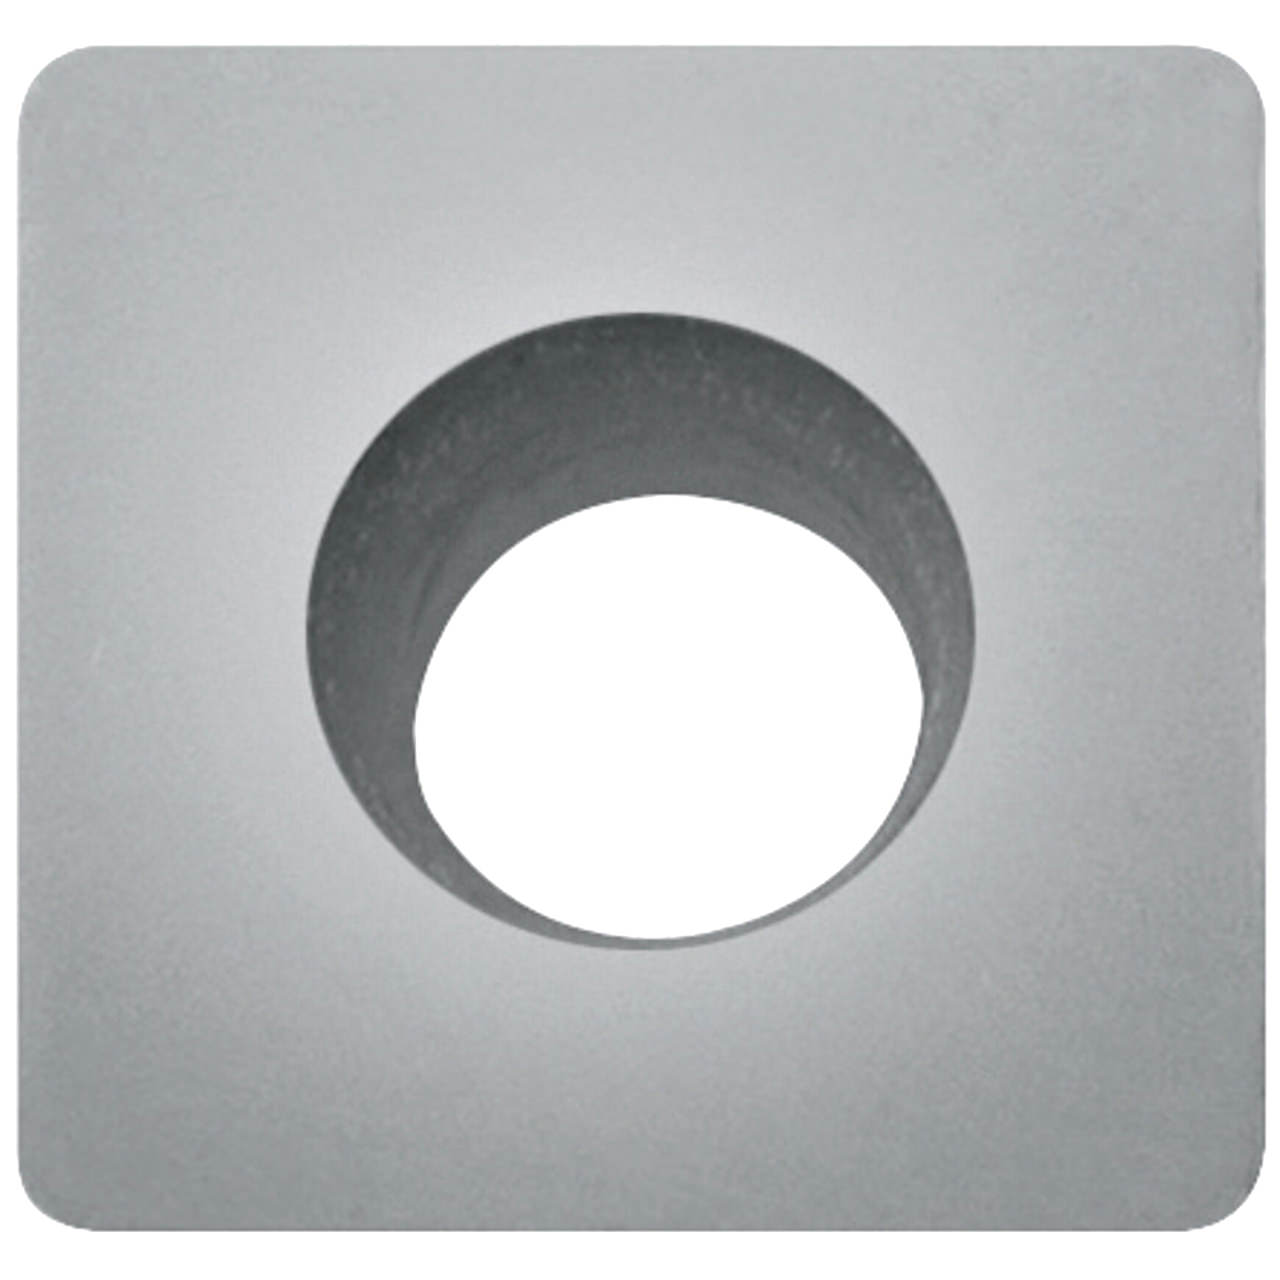 Swix replacement blade square